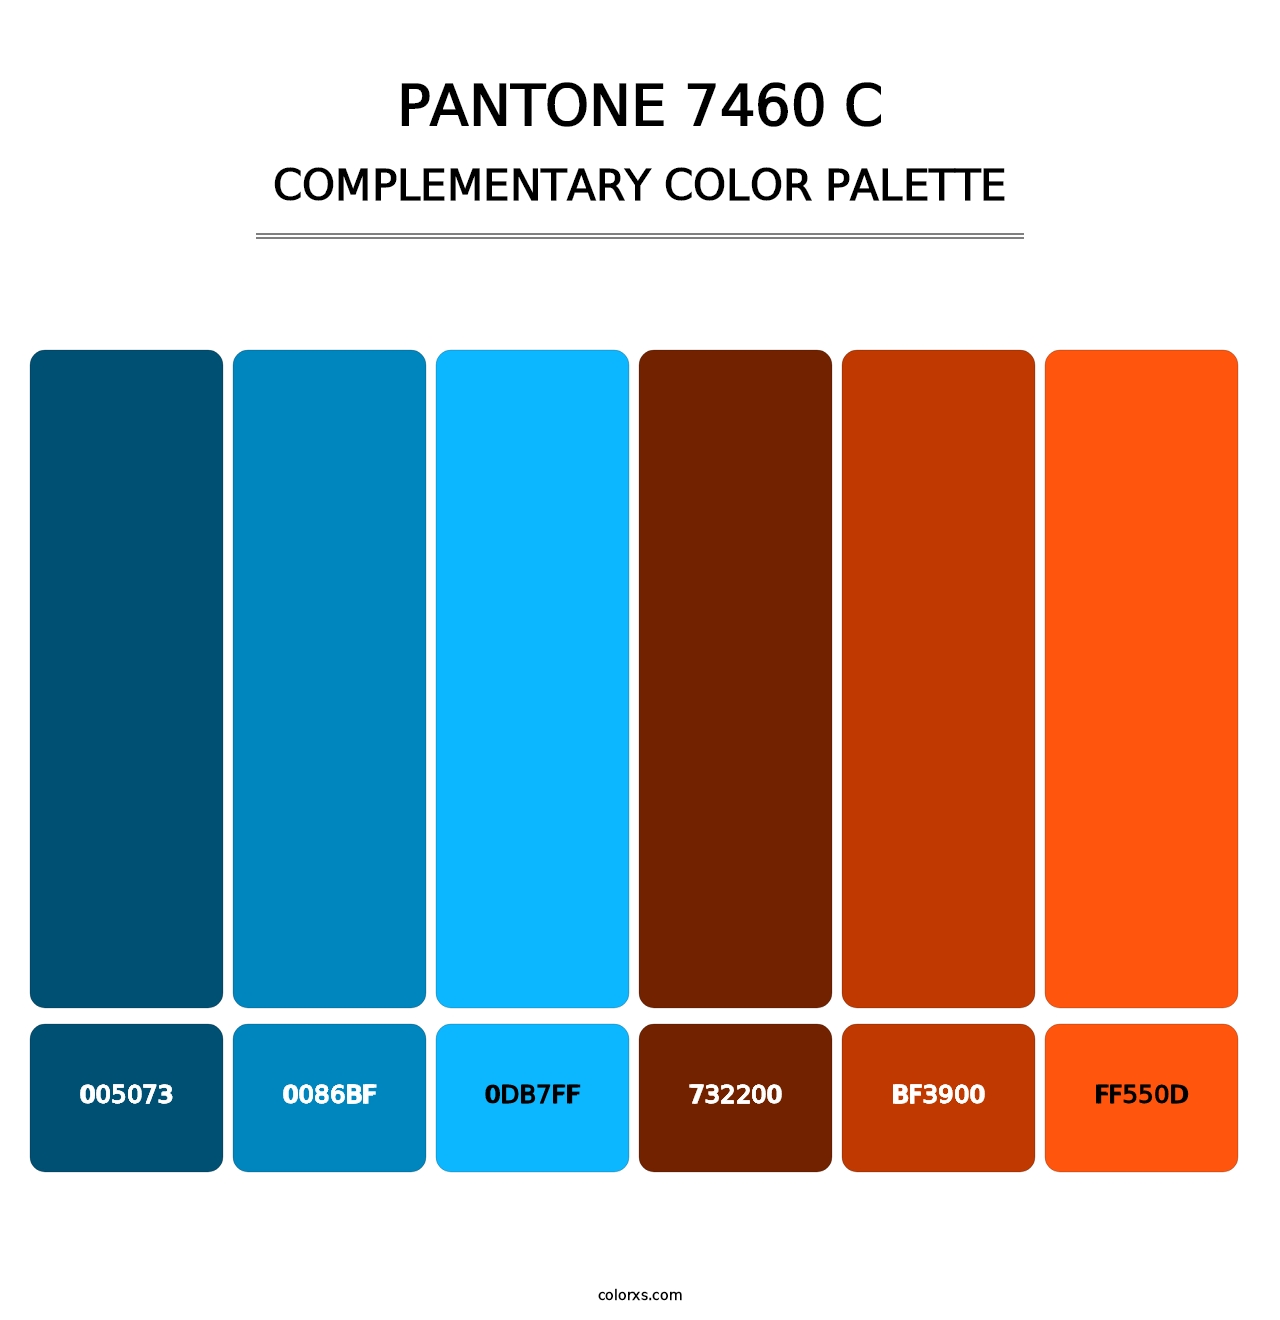 PANTONE 7460 C - Complementary Color Palette